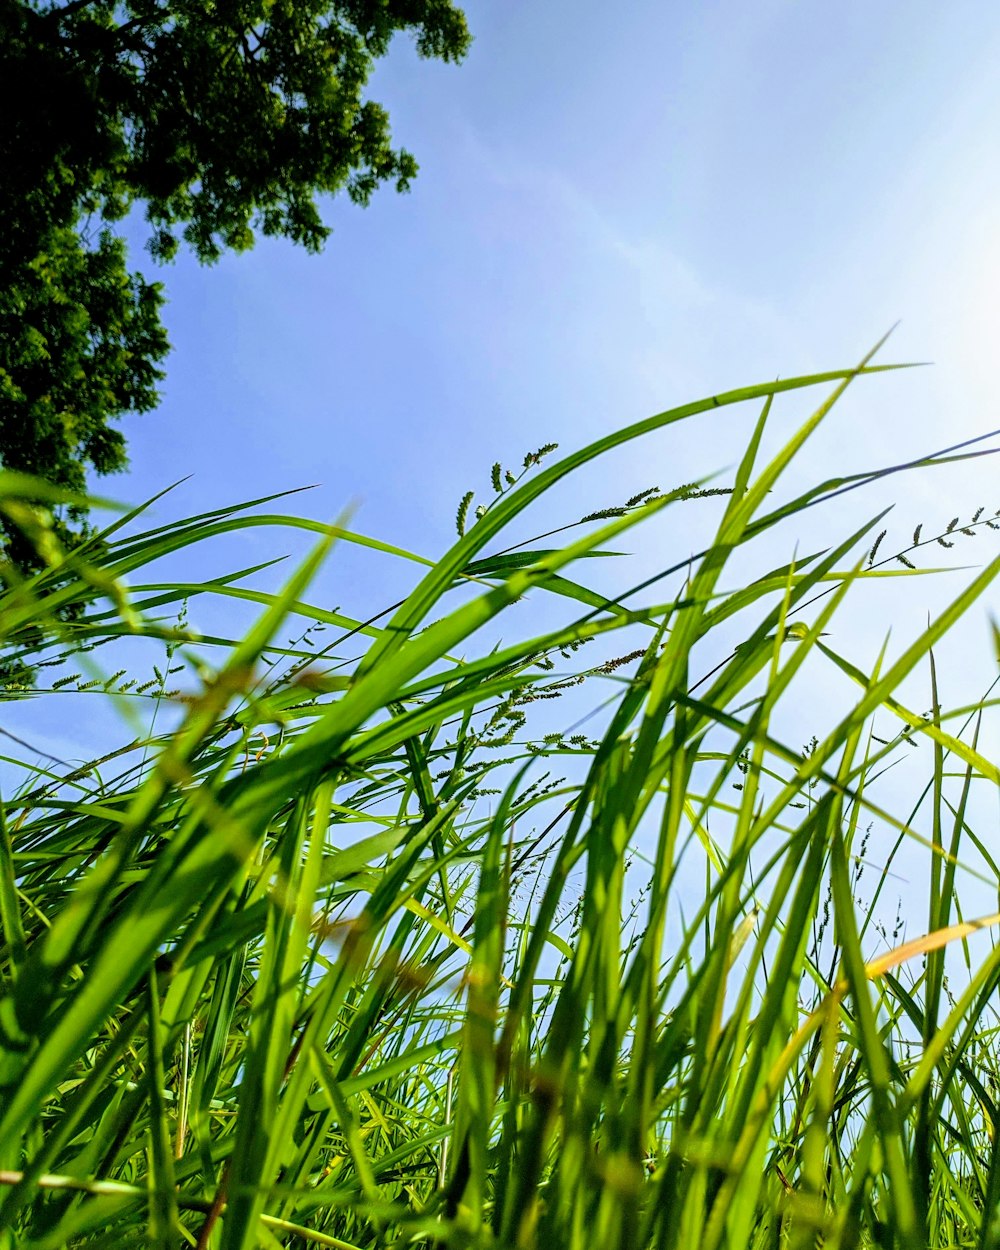 green grass under blue sky during daytime